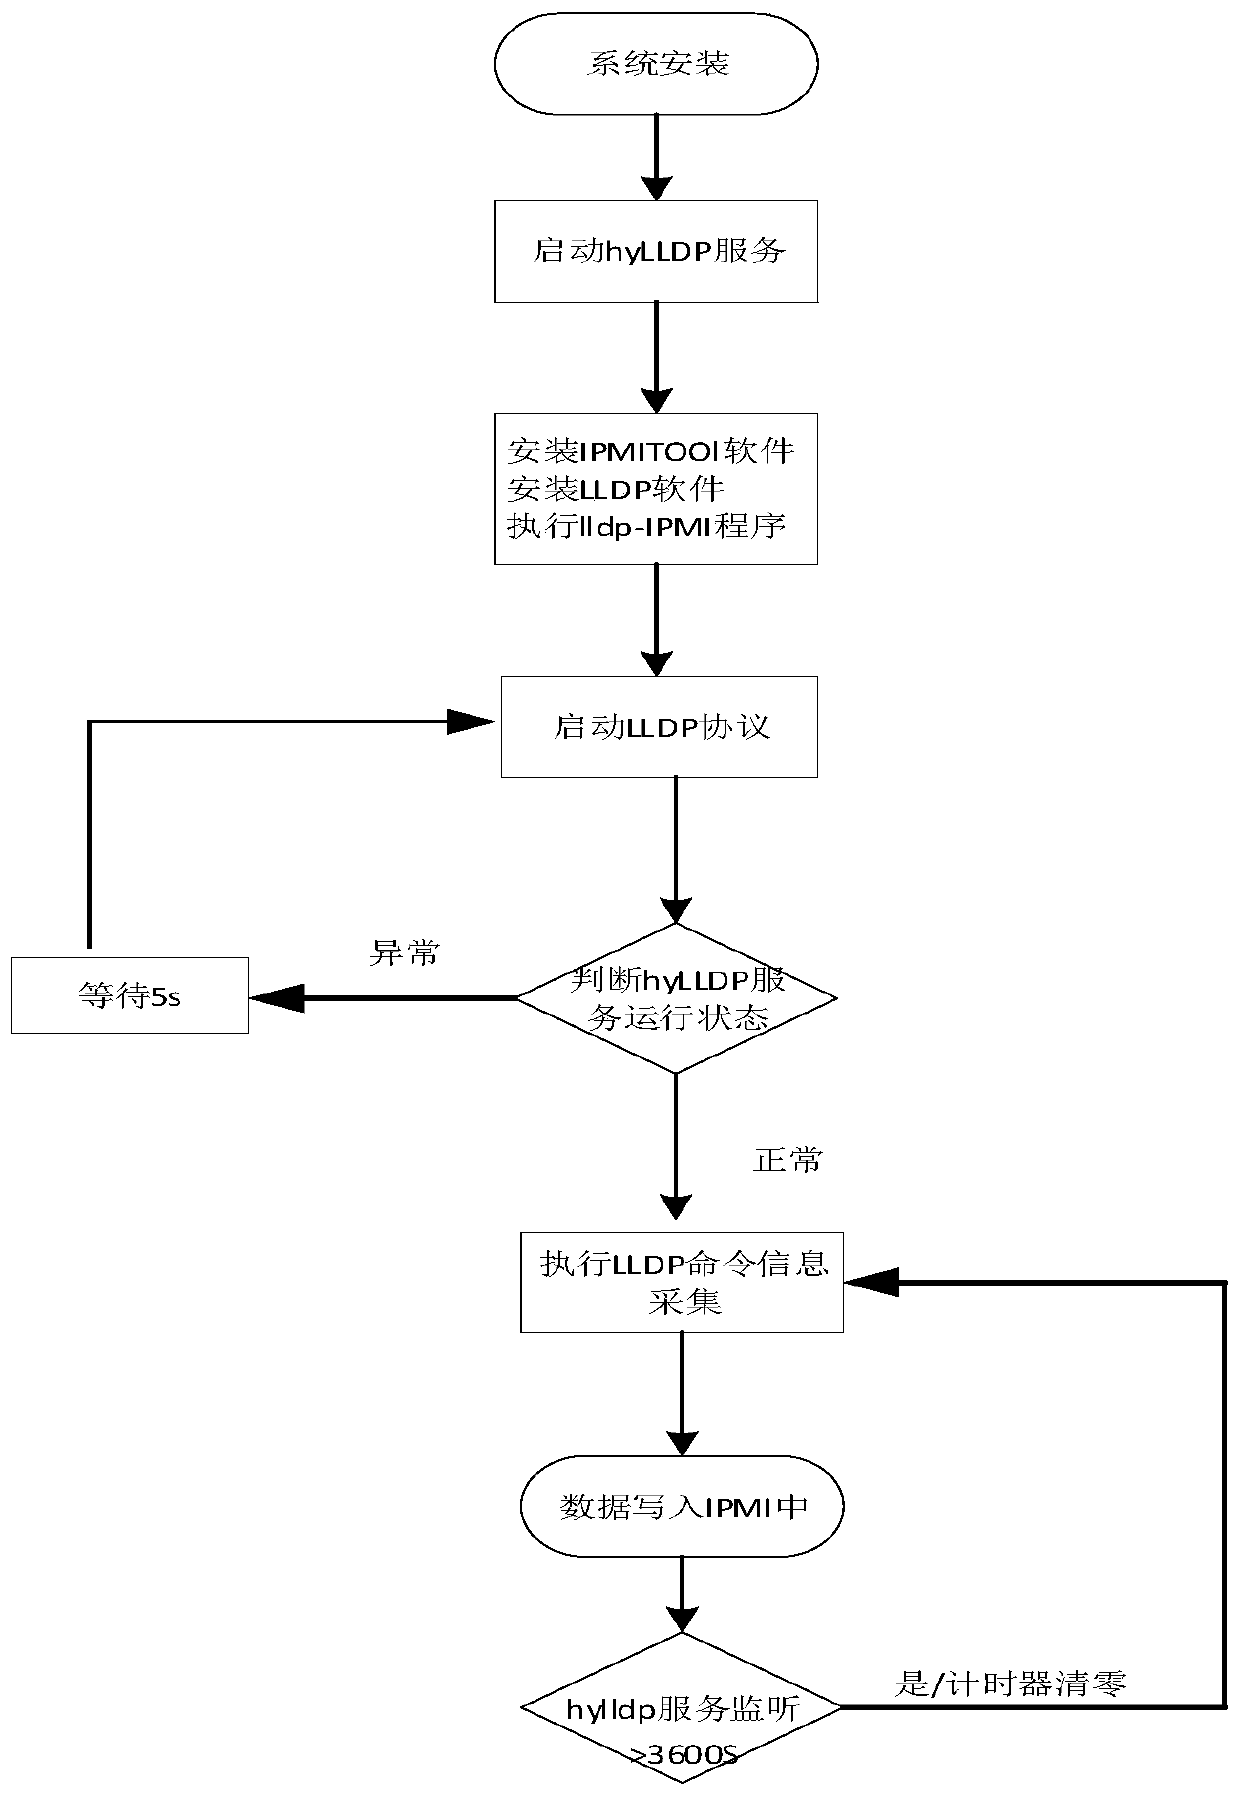 Method for obtaining interconnection information of server port